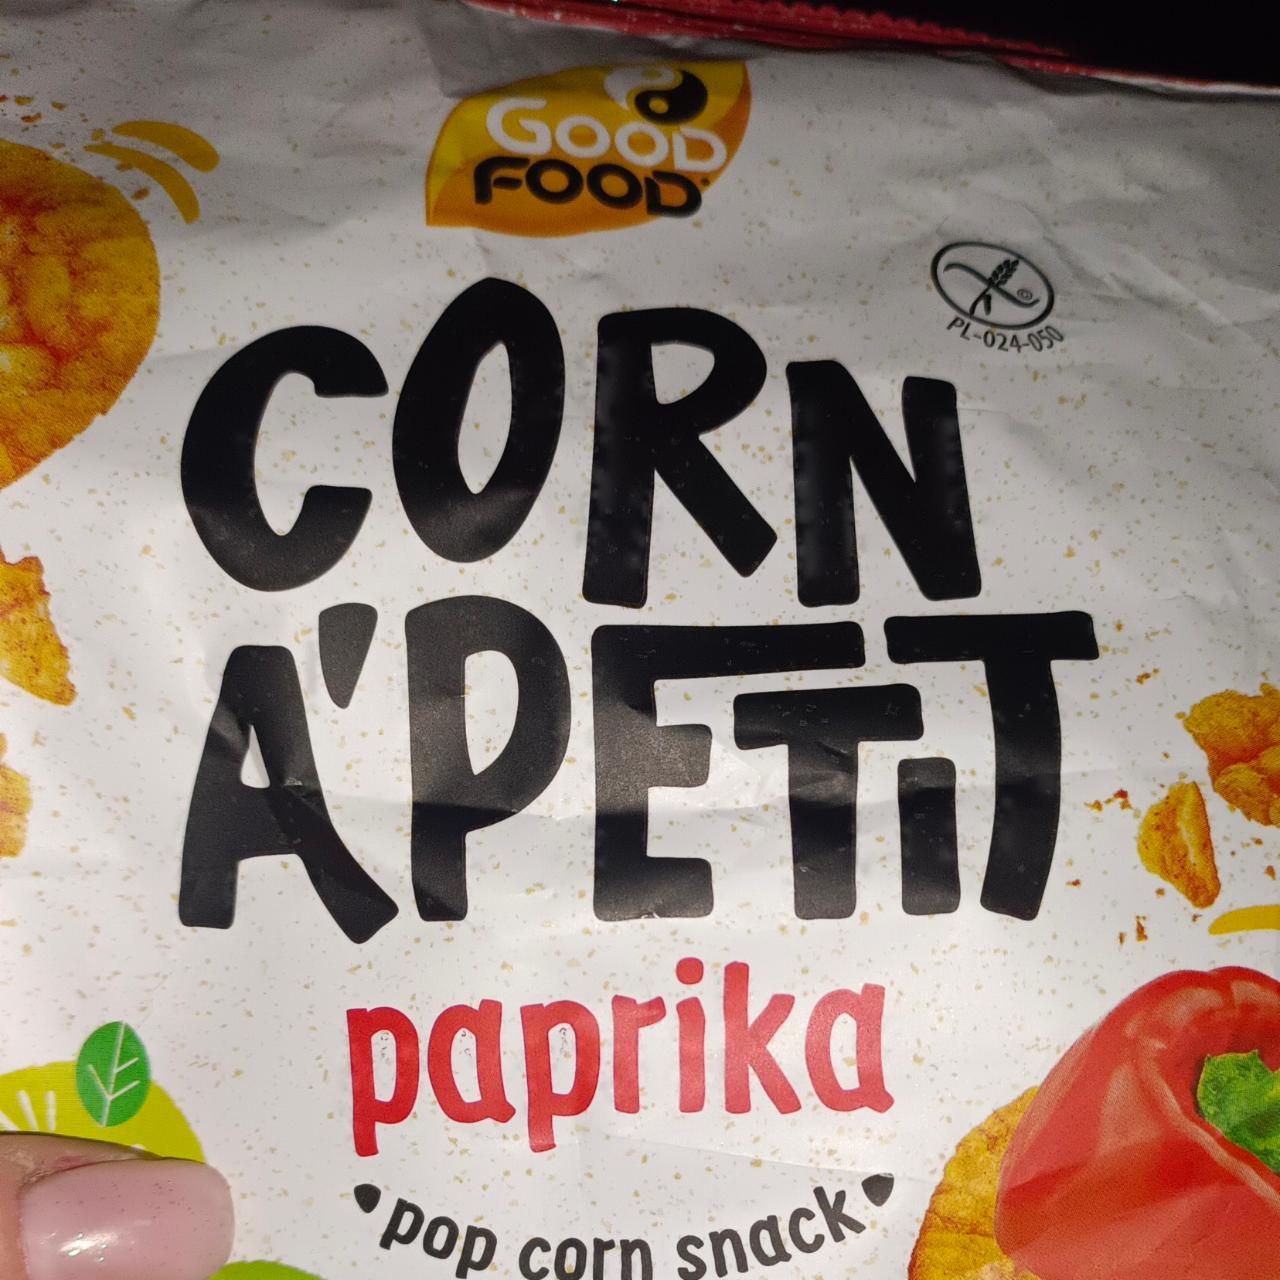 Fotografie - Corn A’Petit paprika Good Food